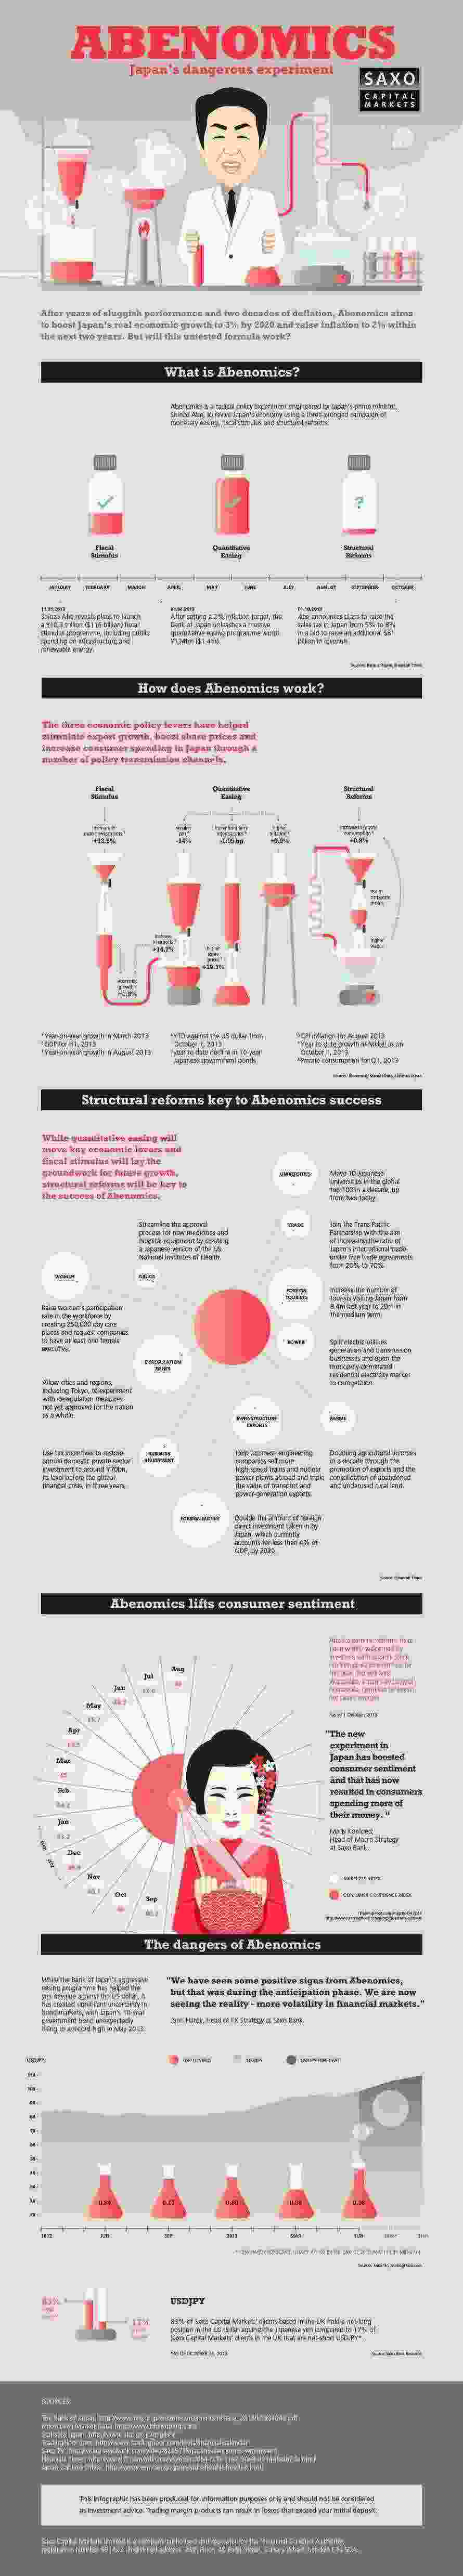 abenomics_infographic.jpg